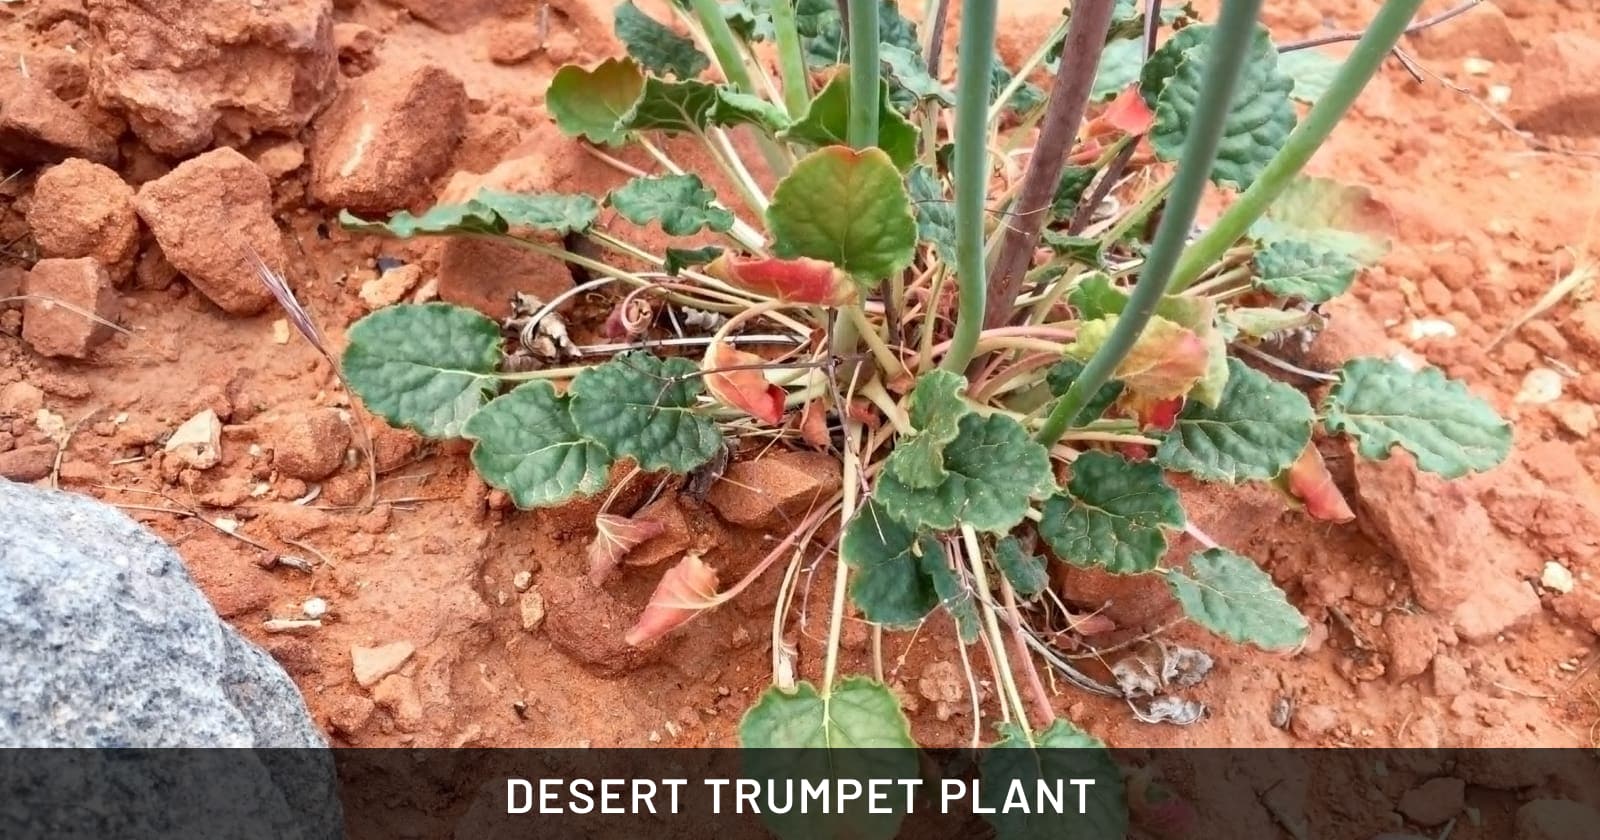 Desert trumpet plant